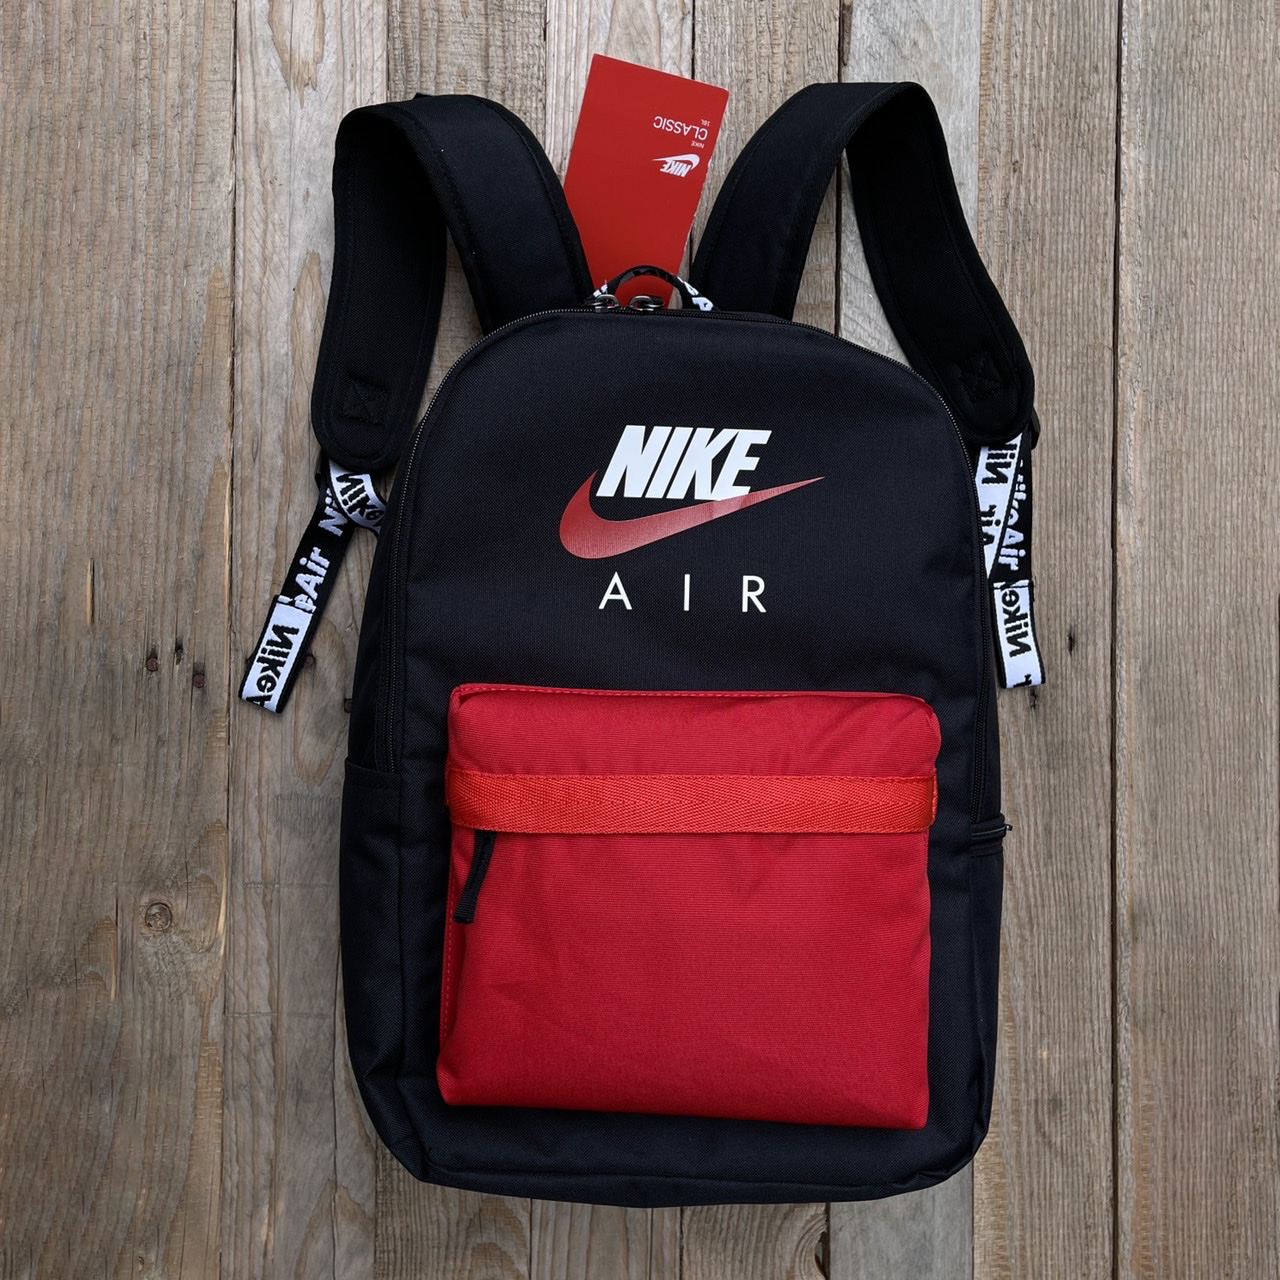 Balo Nike Air - Teemosneaker